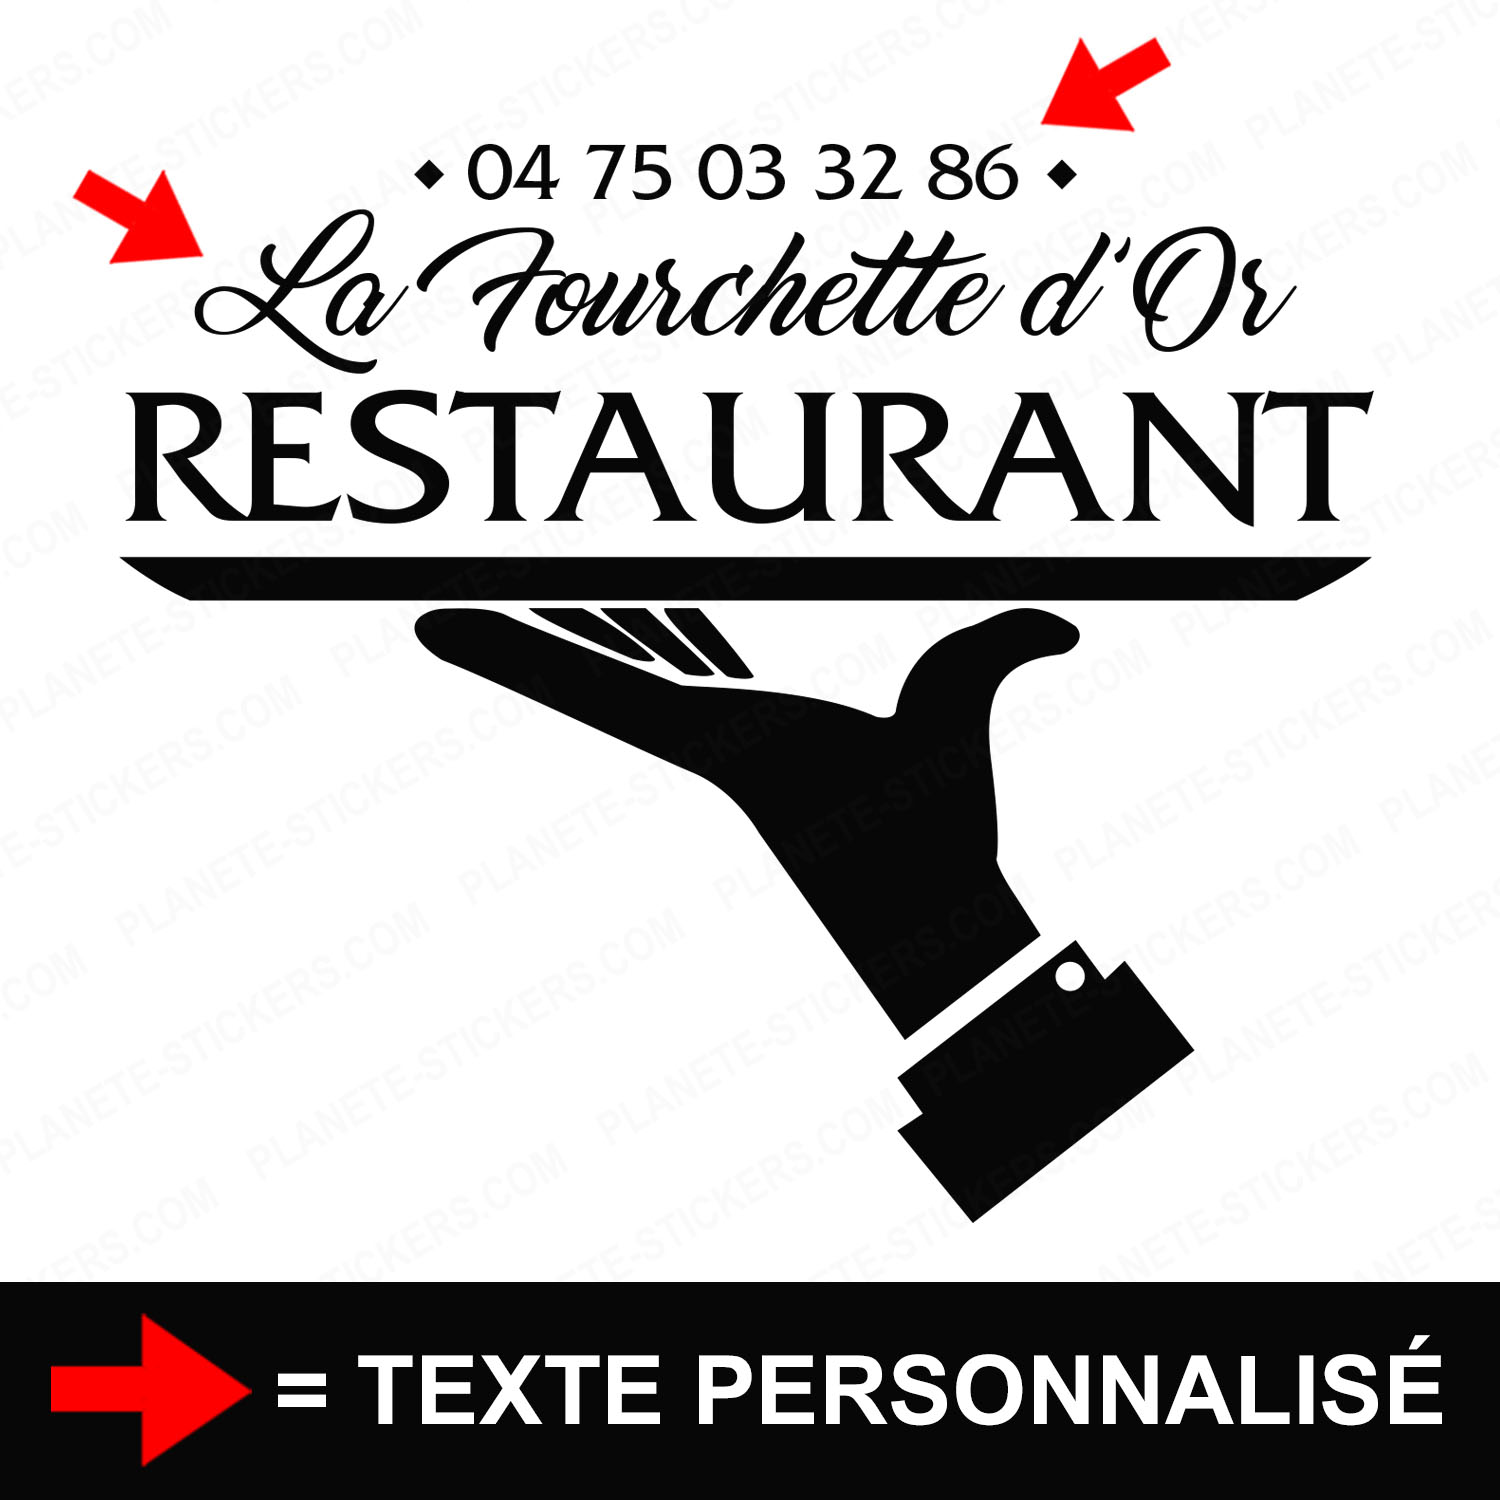 ref13restaurantvitrine-stickers-restaurant-vitrine-restaurant-sticker-personnalisé-autocollant-pro-restaurateur-vitre-resto-professionnel-logo-plateau-2